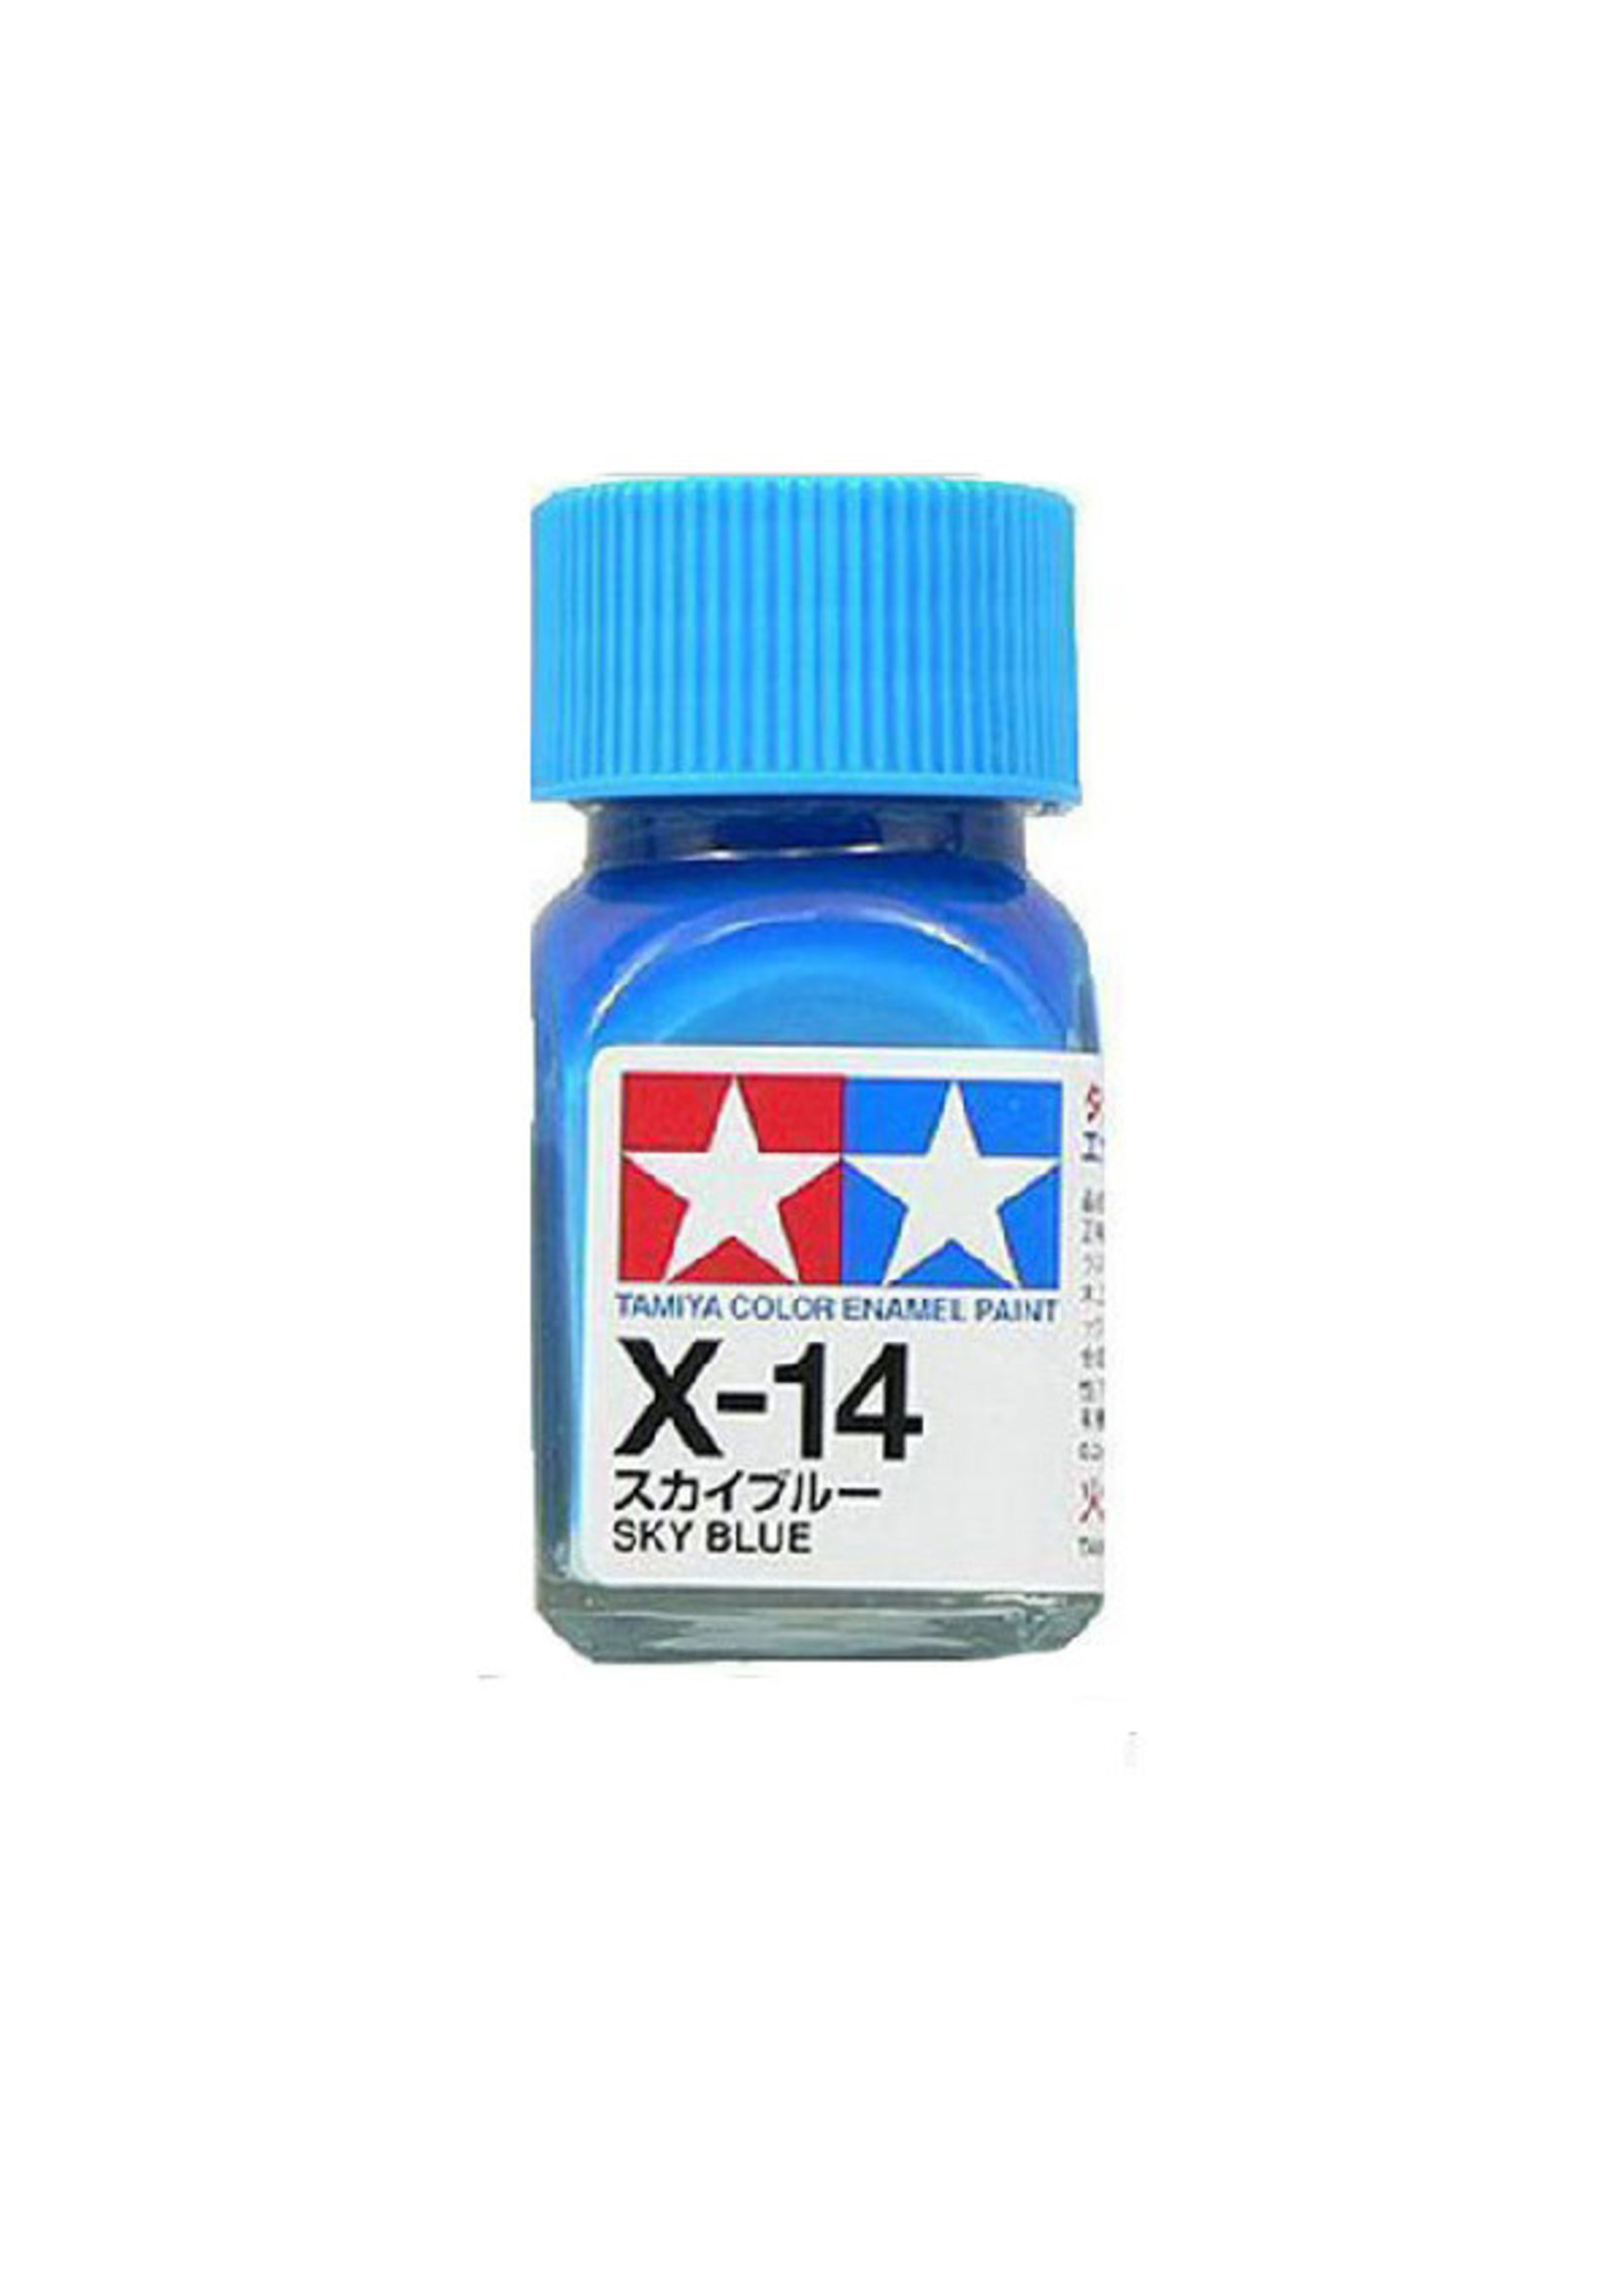 Tamiya Tamiya color enamel paint - X-14  - Sky blue